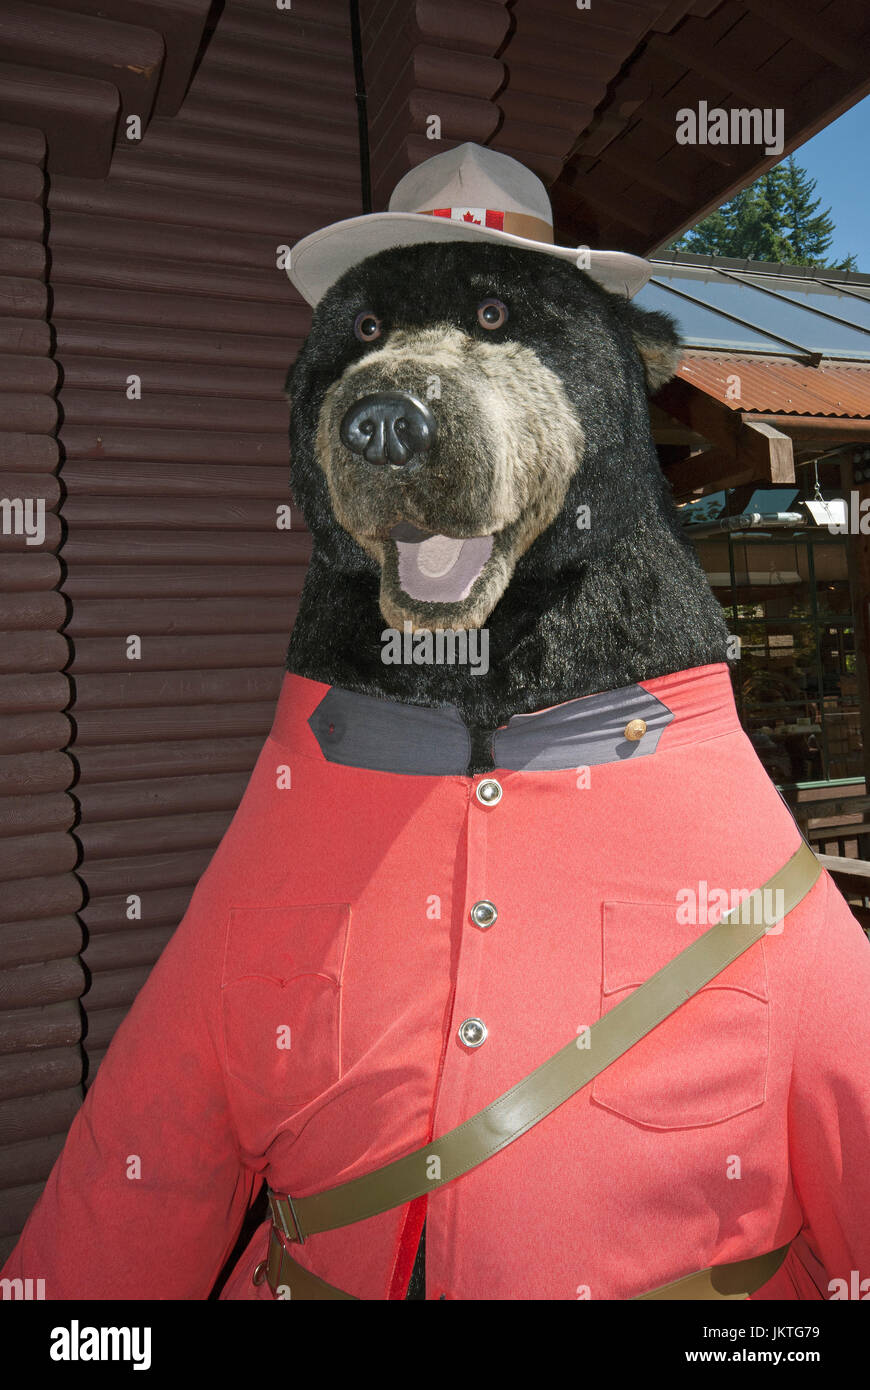 Stuffed bear with a Mountie uniform at Capilano Suspension Bridge Park, Vancouver, British Columbia, Canada Stock Photo